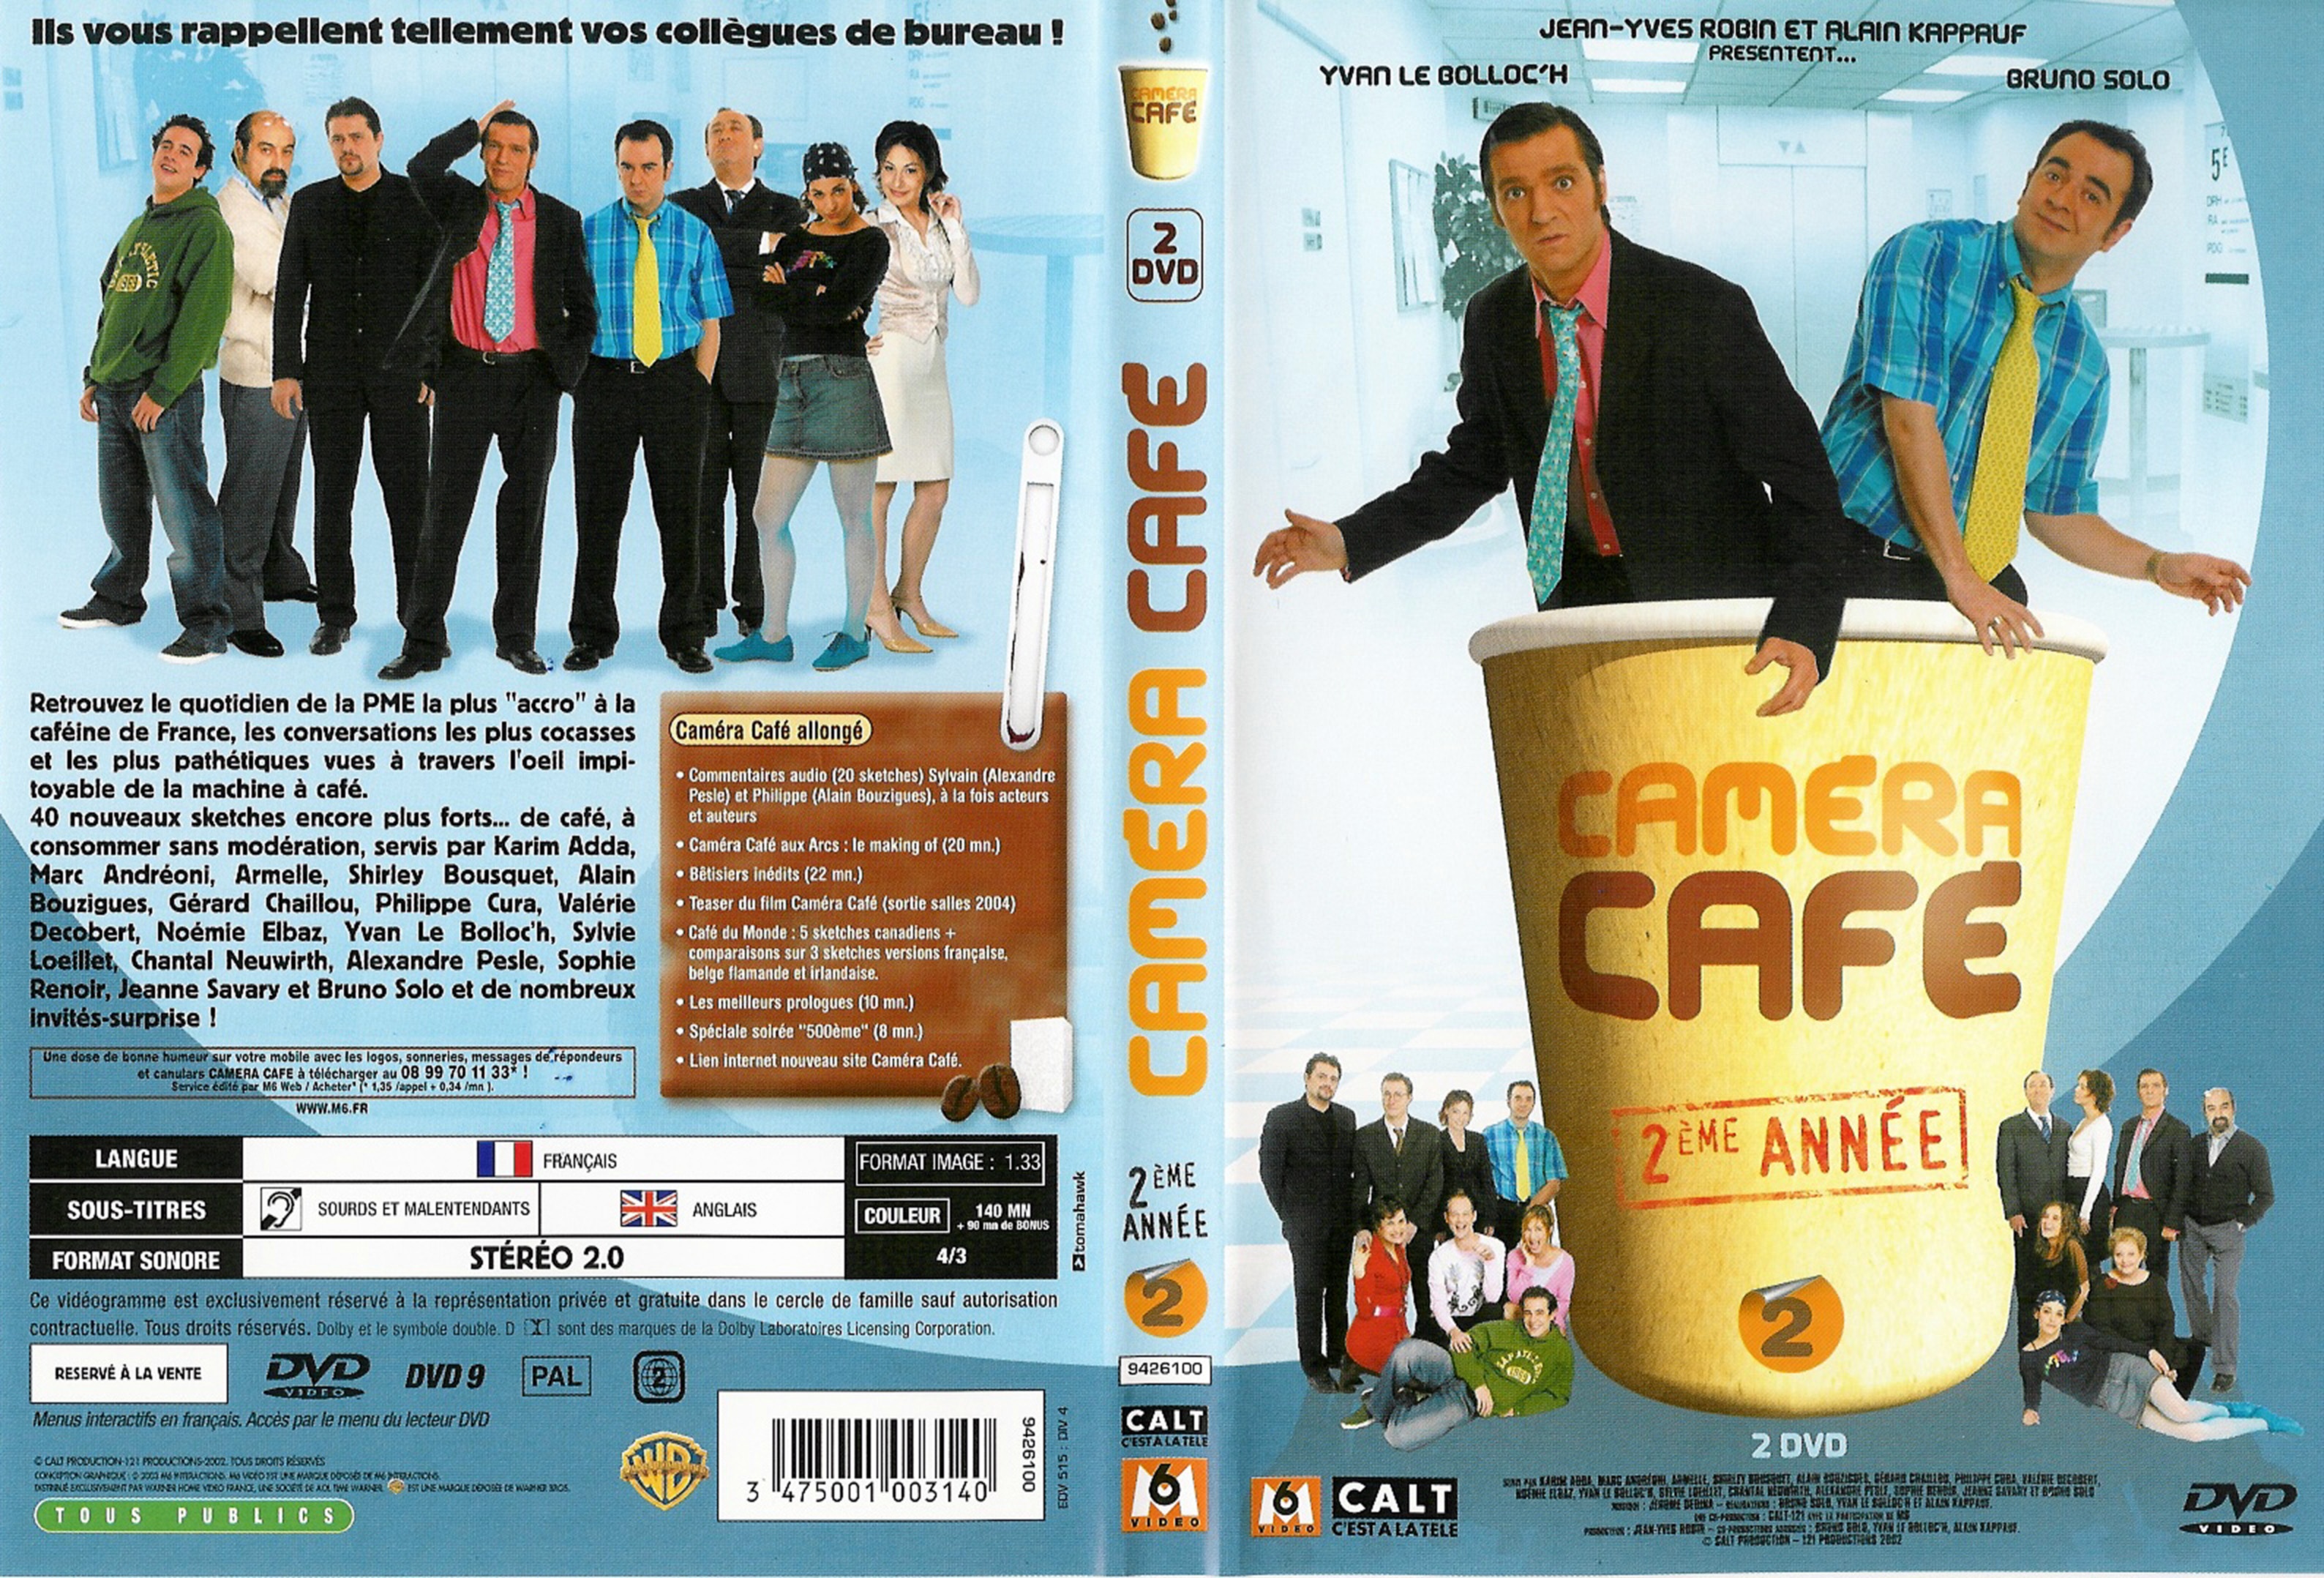 Jaquette DVD Camera cafe saison 2 vol 2